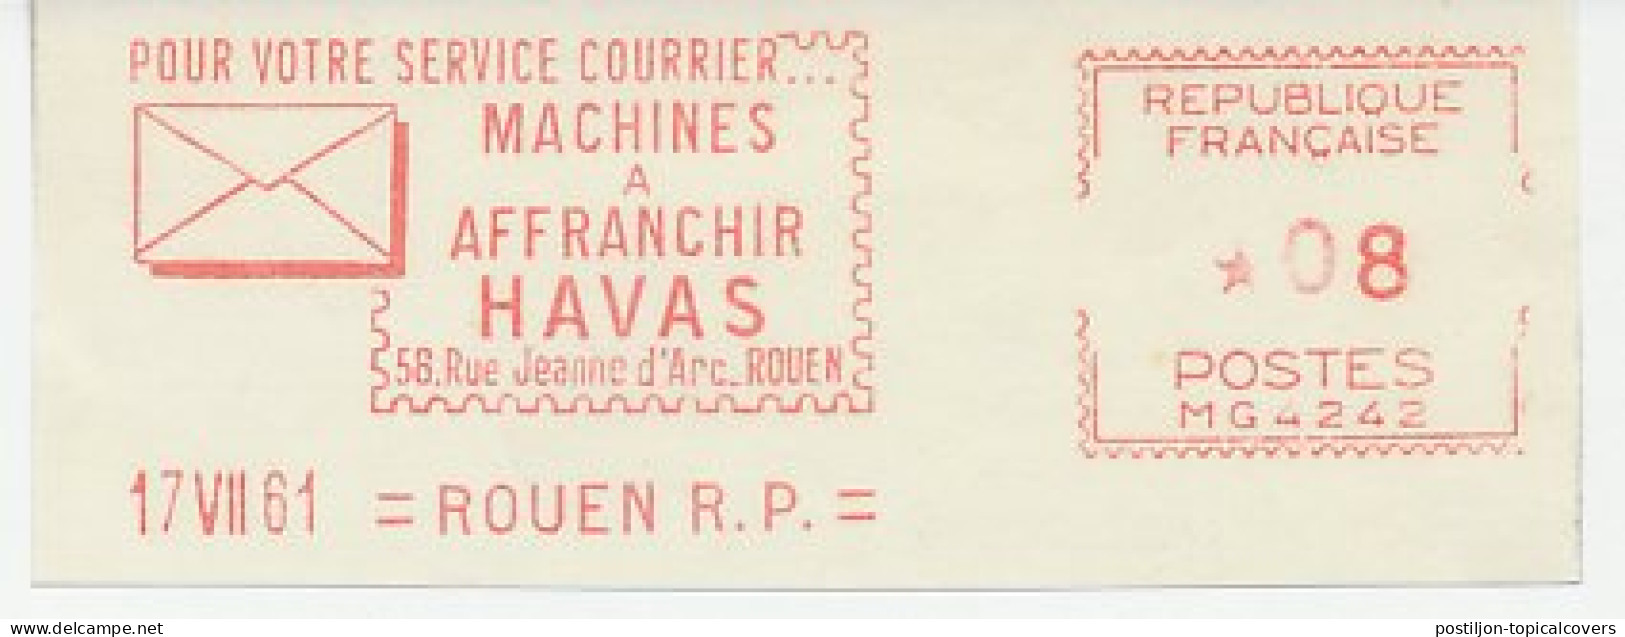 Meter Cut France 1961 Havas - Automatenmarken [ATM]